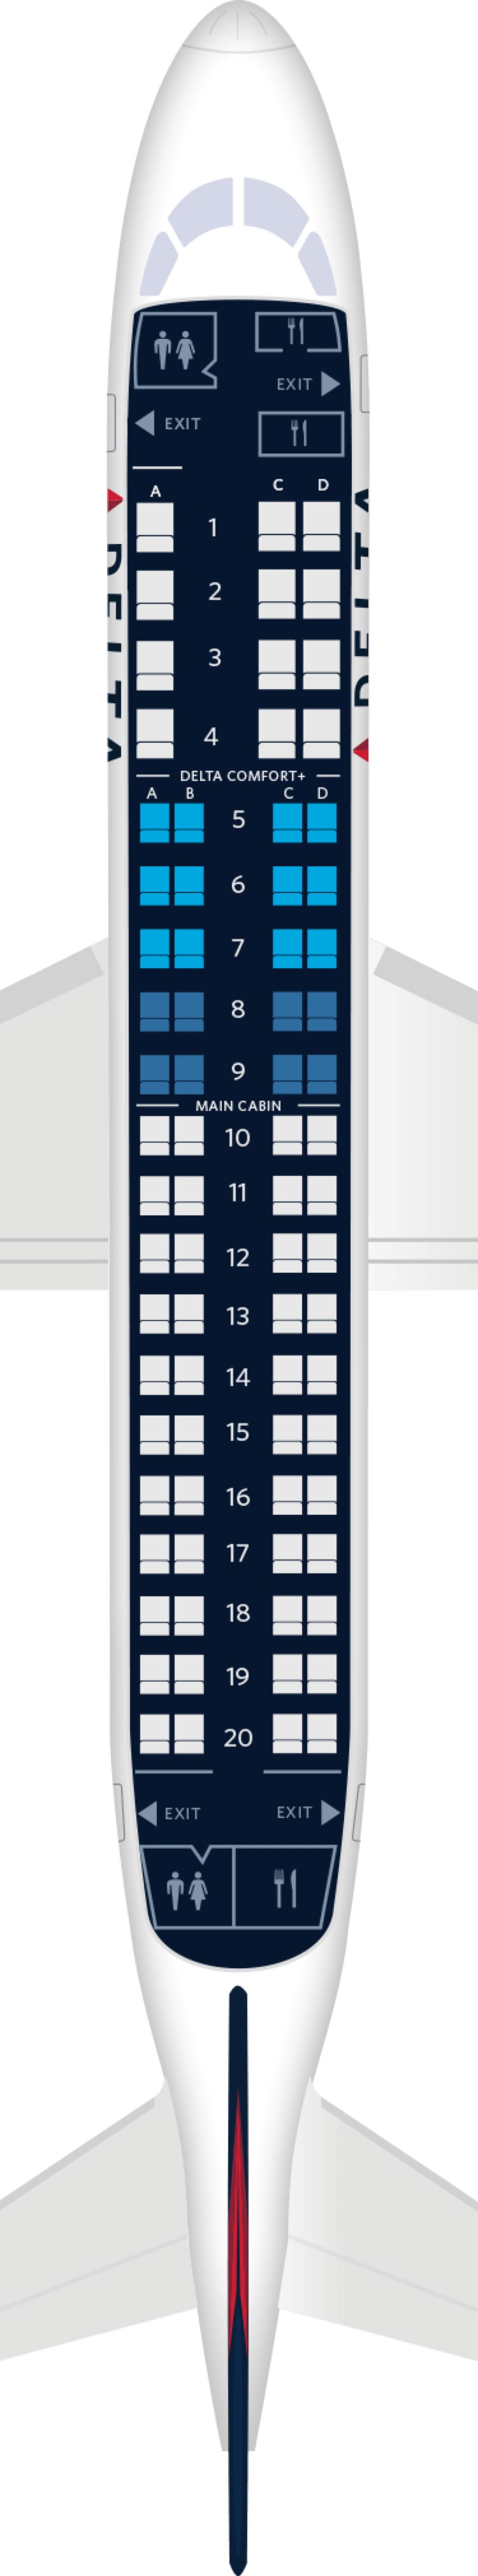 United Airlines Seating Chart Erj 175 | Brokeasshome.com